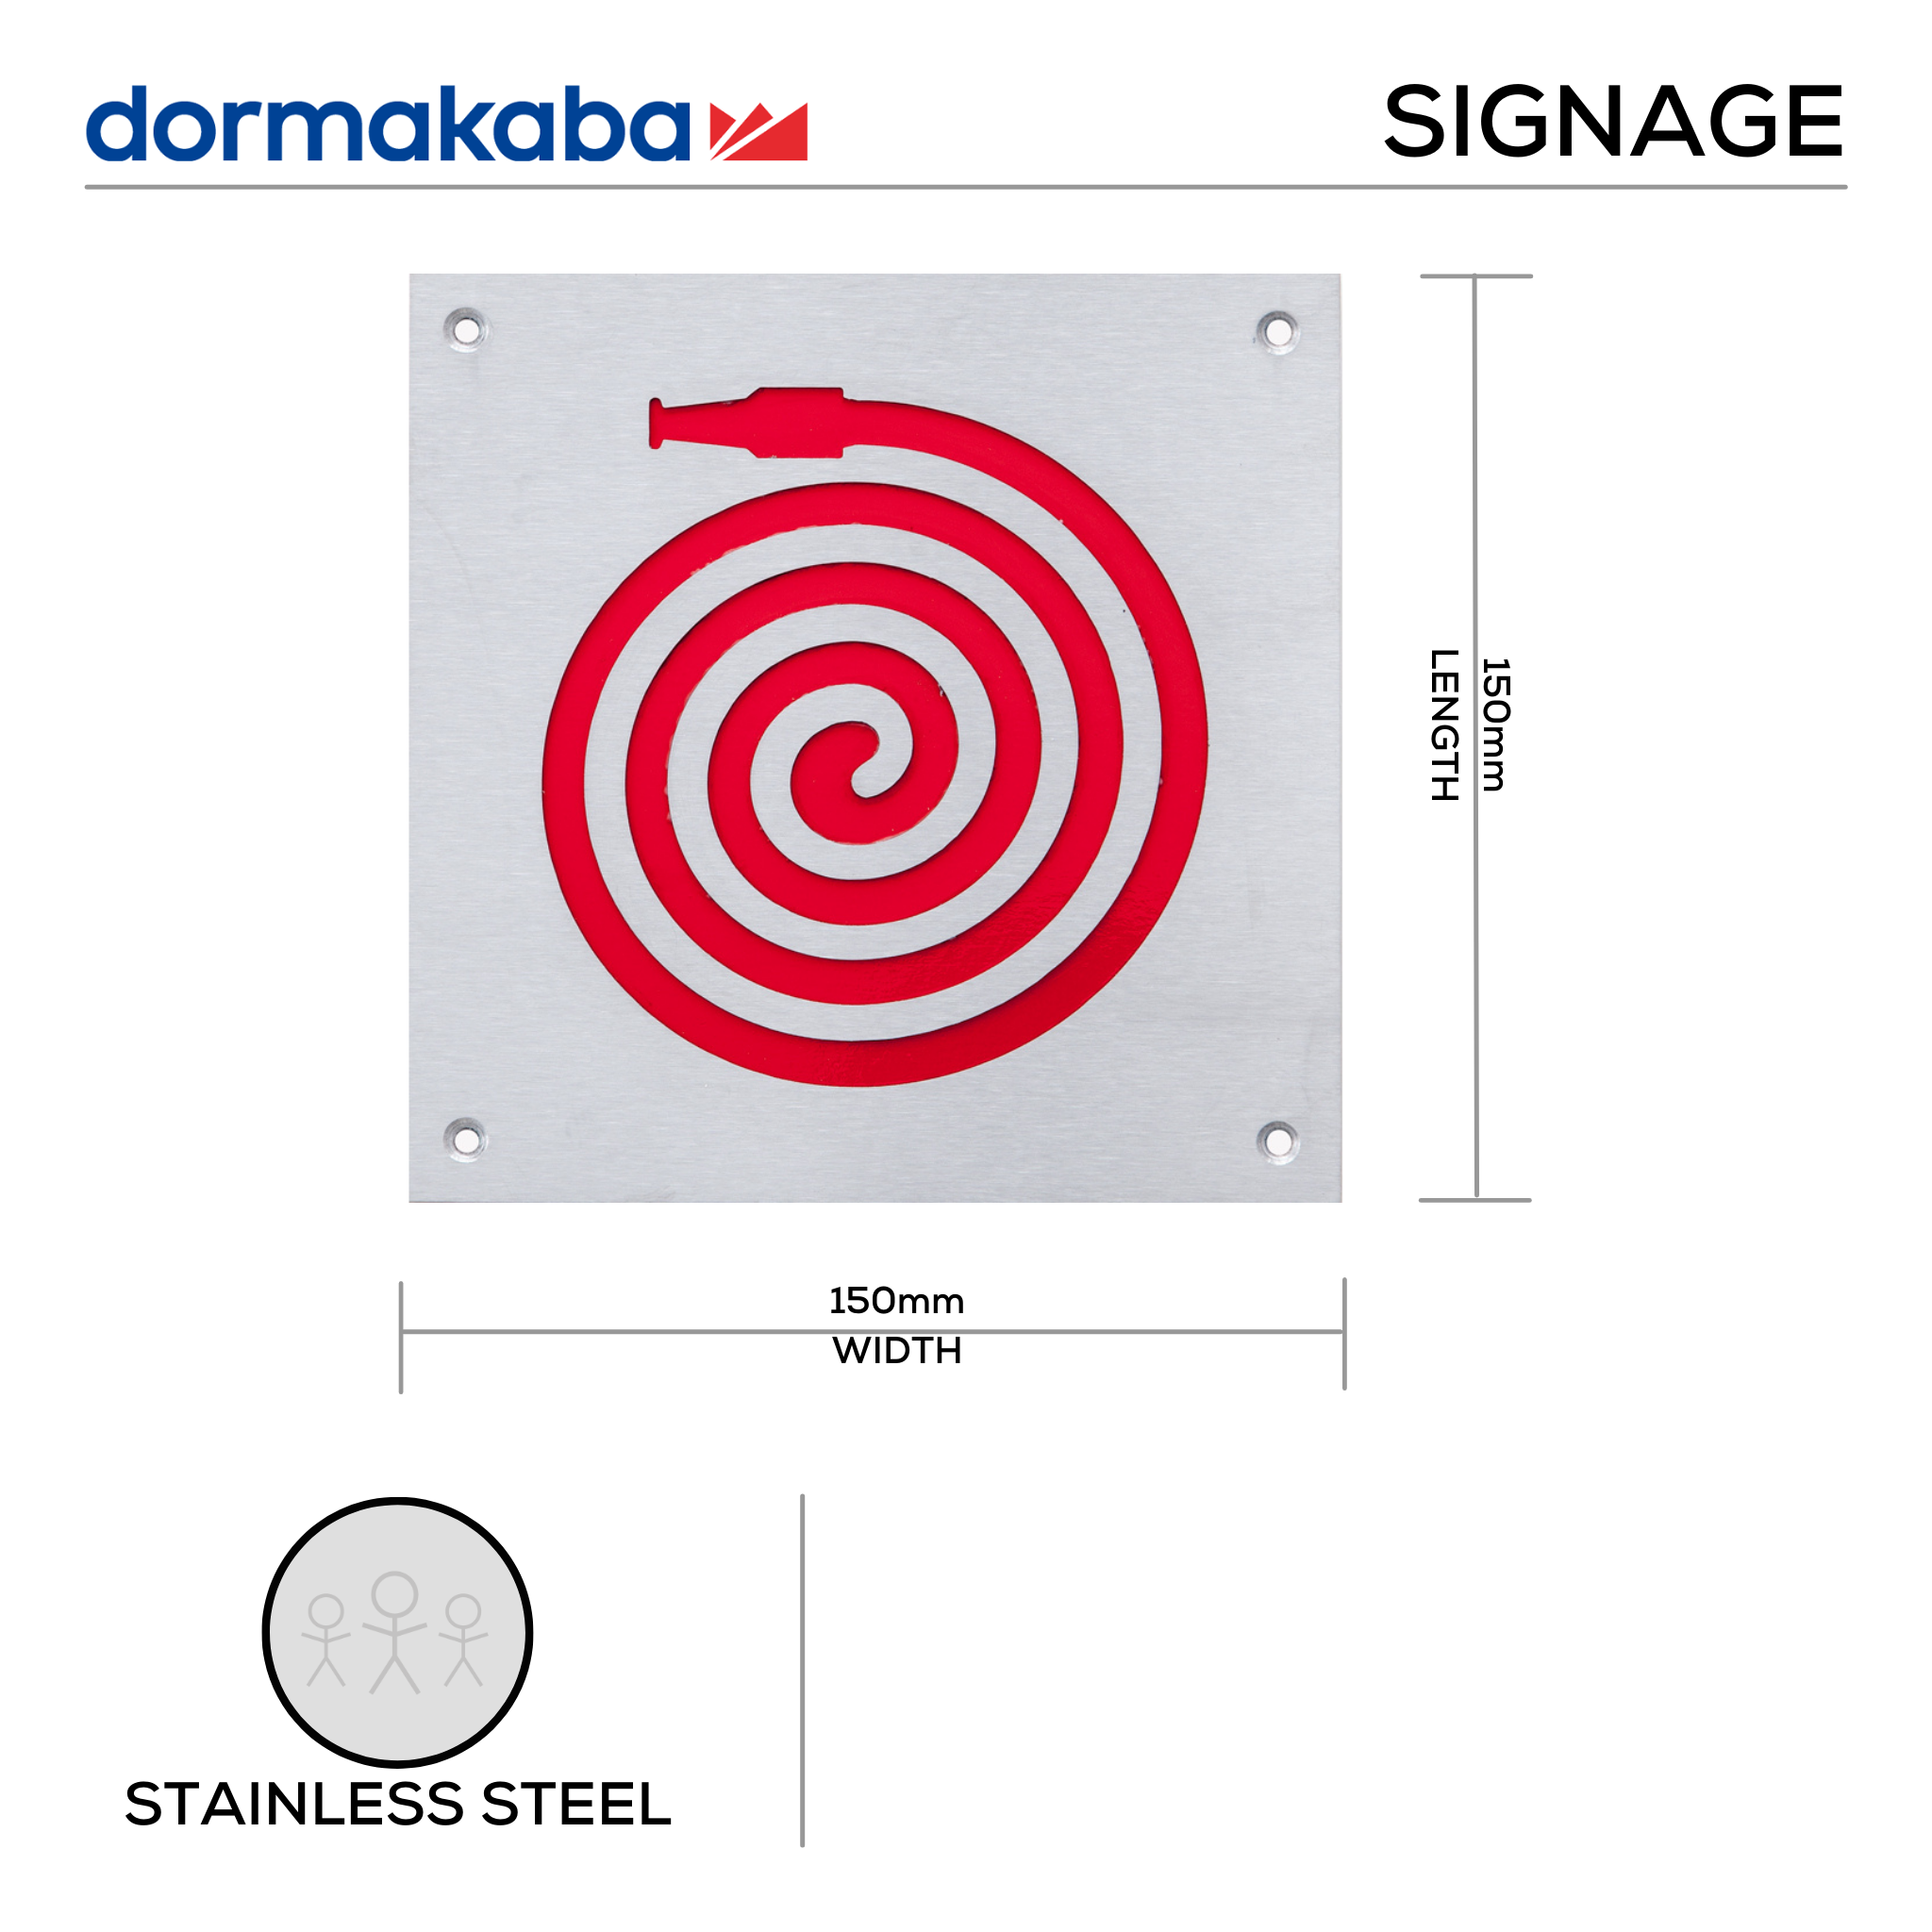 DSS-145, Door Signage, Fire Hose Reel , 150mm (l), 150mm (w), 1,2mm (t), Stainless Steel, DORMAKABA